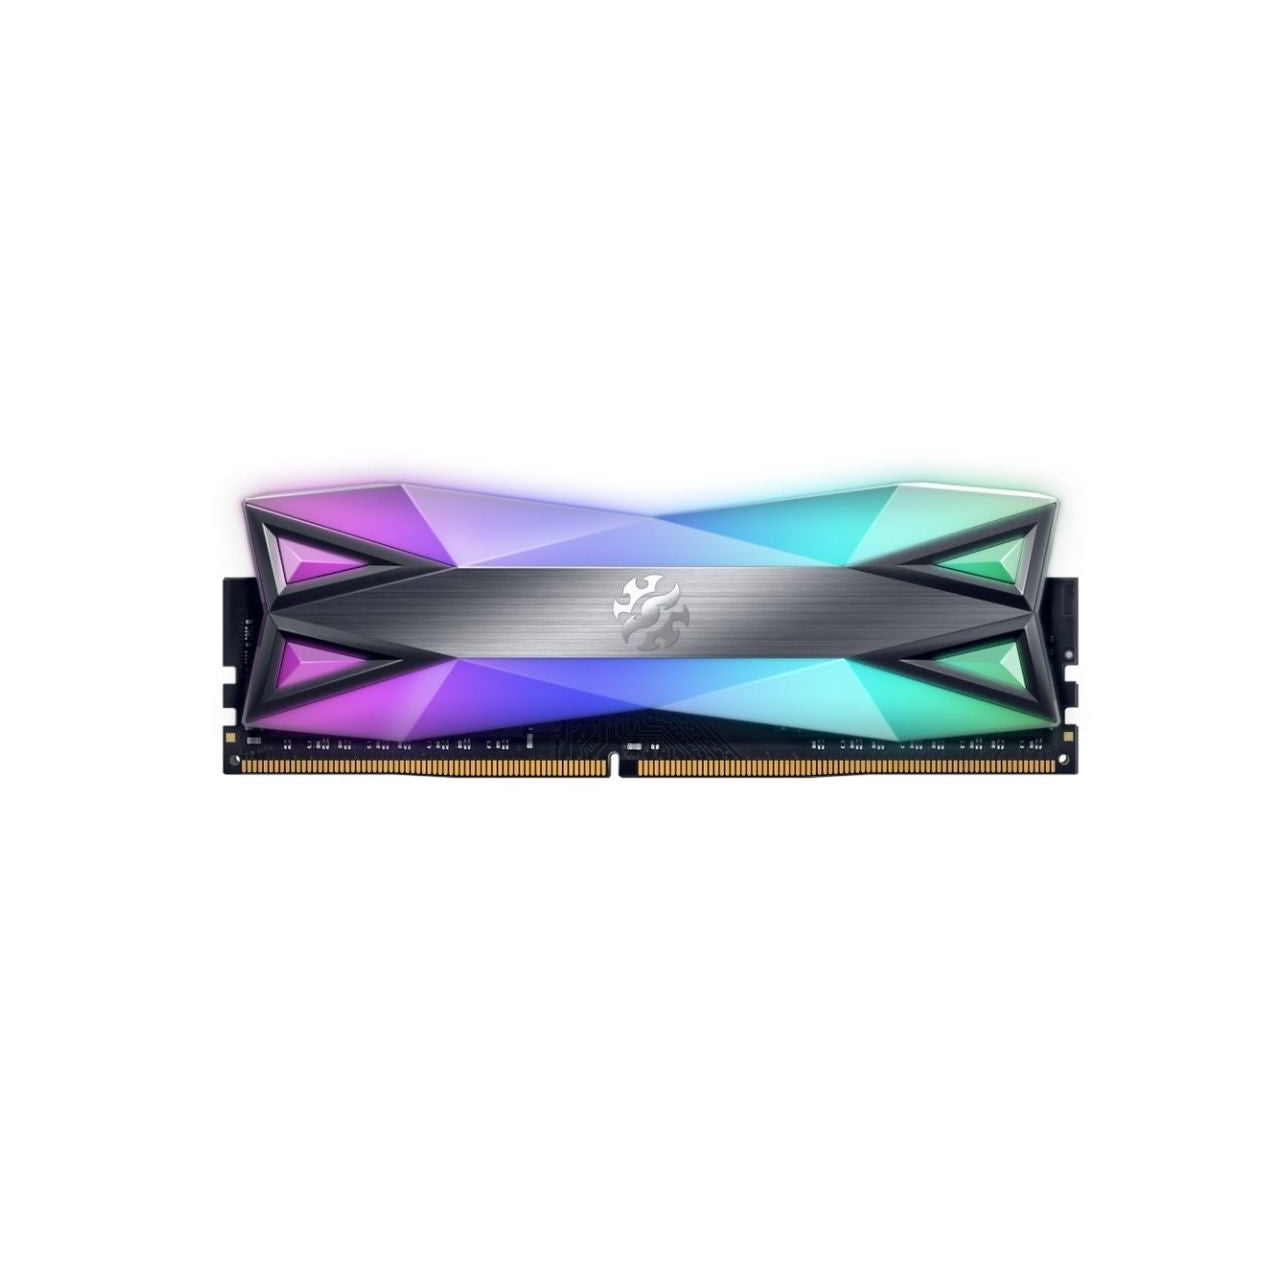 ADATA RAM PC (แรมพีซี) 16GB (8GBX2) DDR4/3200 XPG SPECTRIX D60G RGB LIFETIME WARRANTY